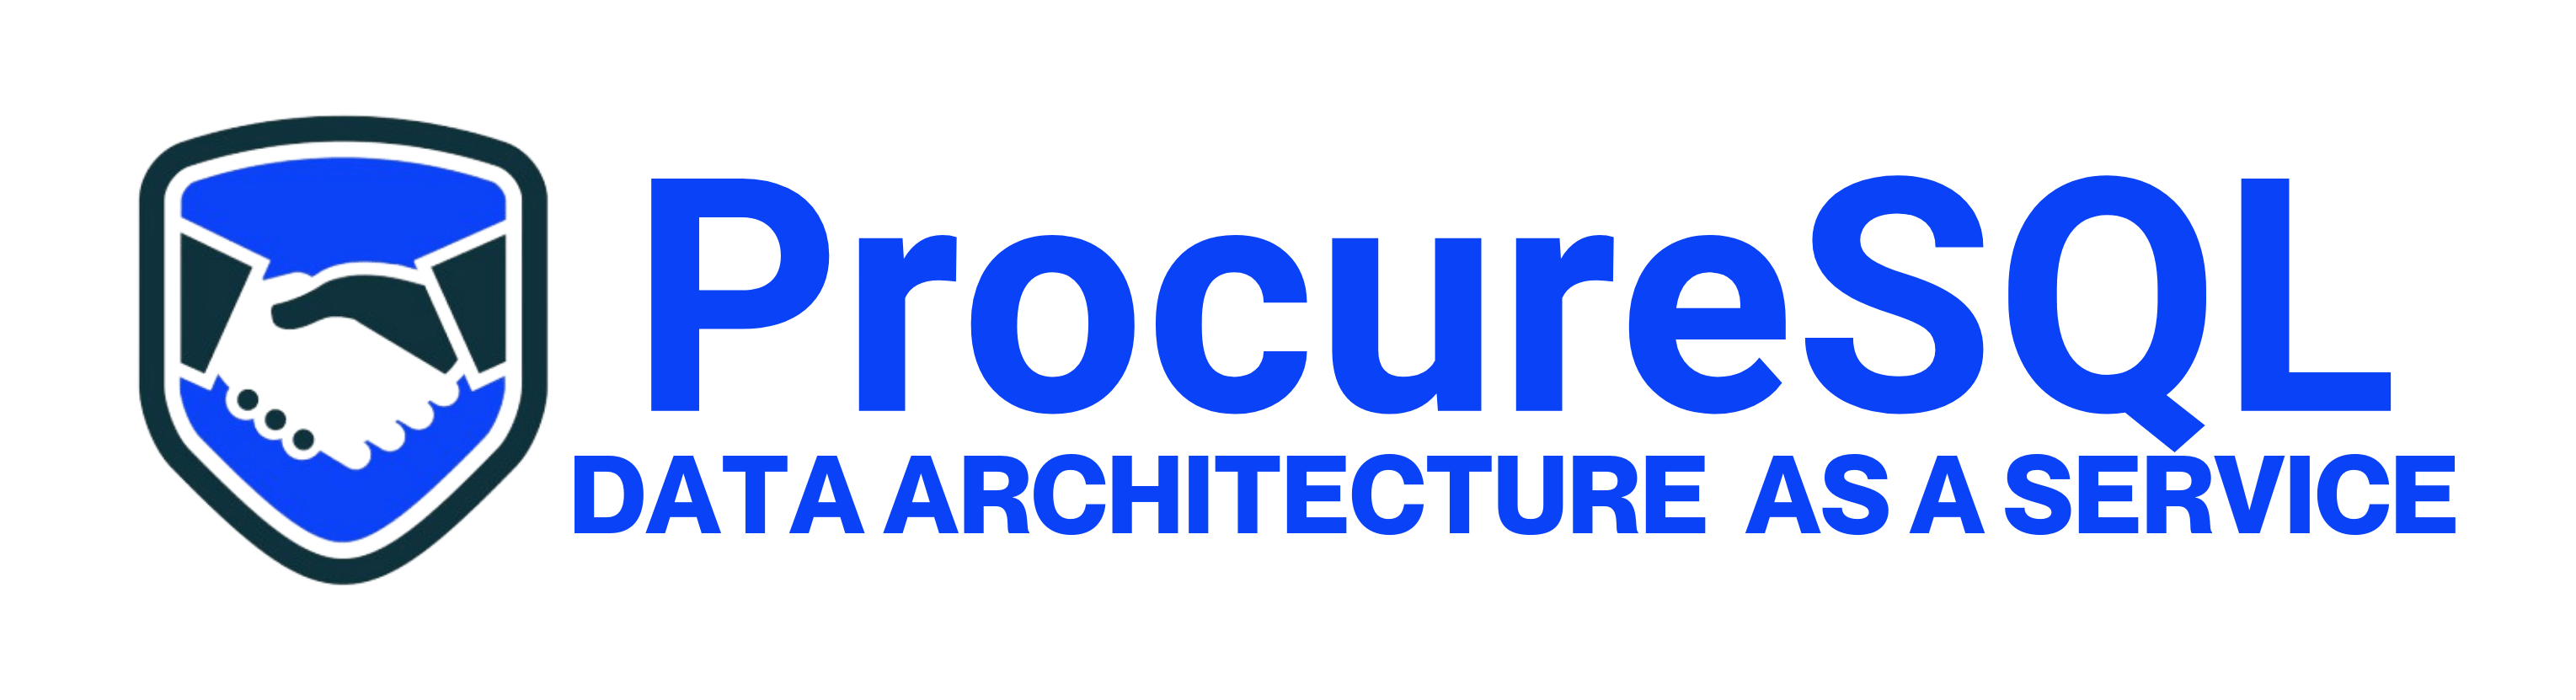 ProcureSQL Data Architect as a Service